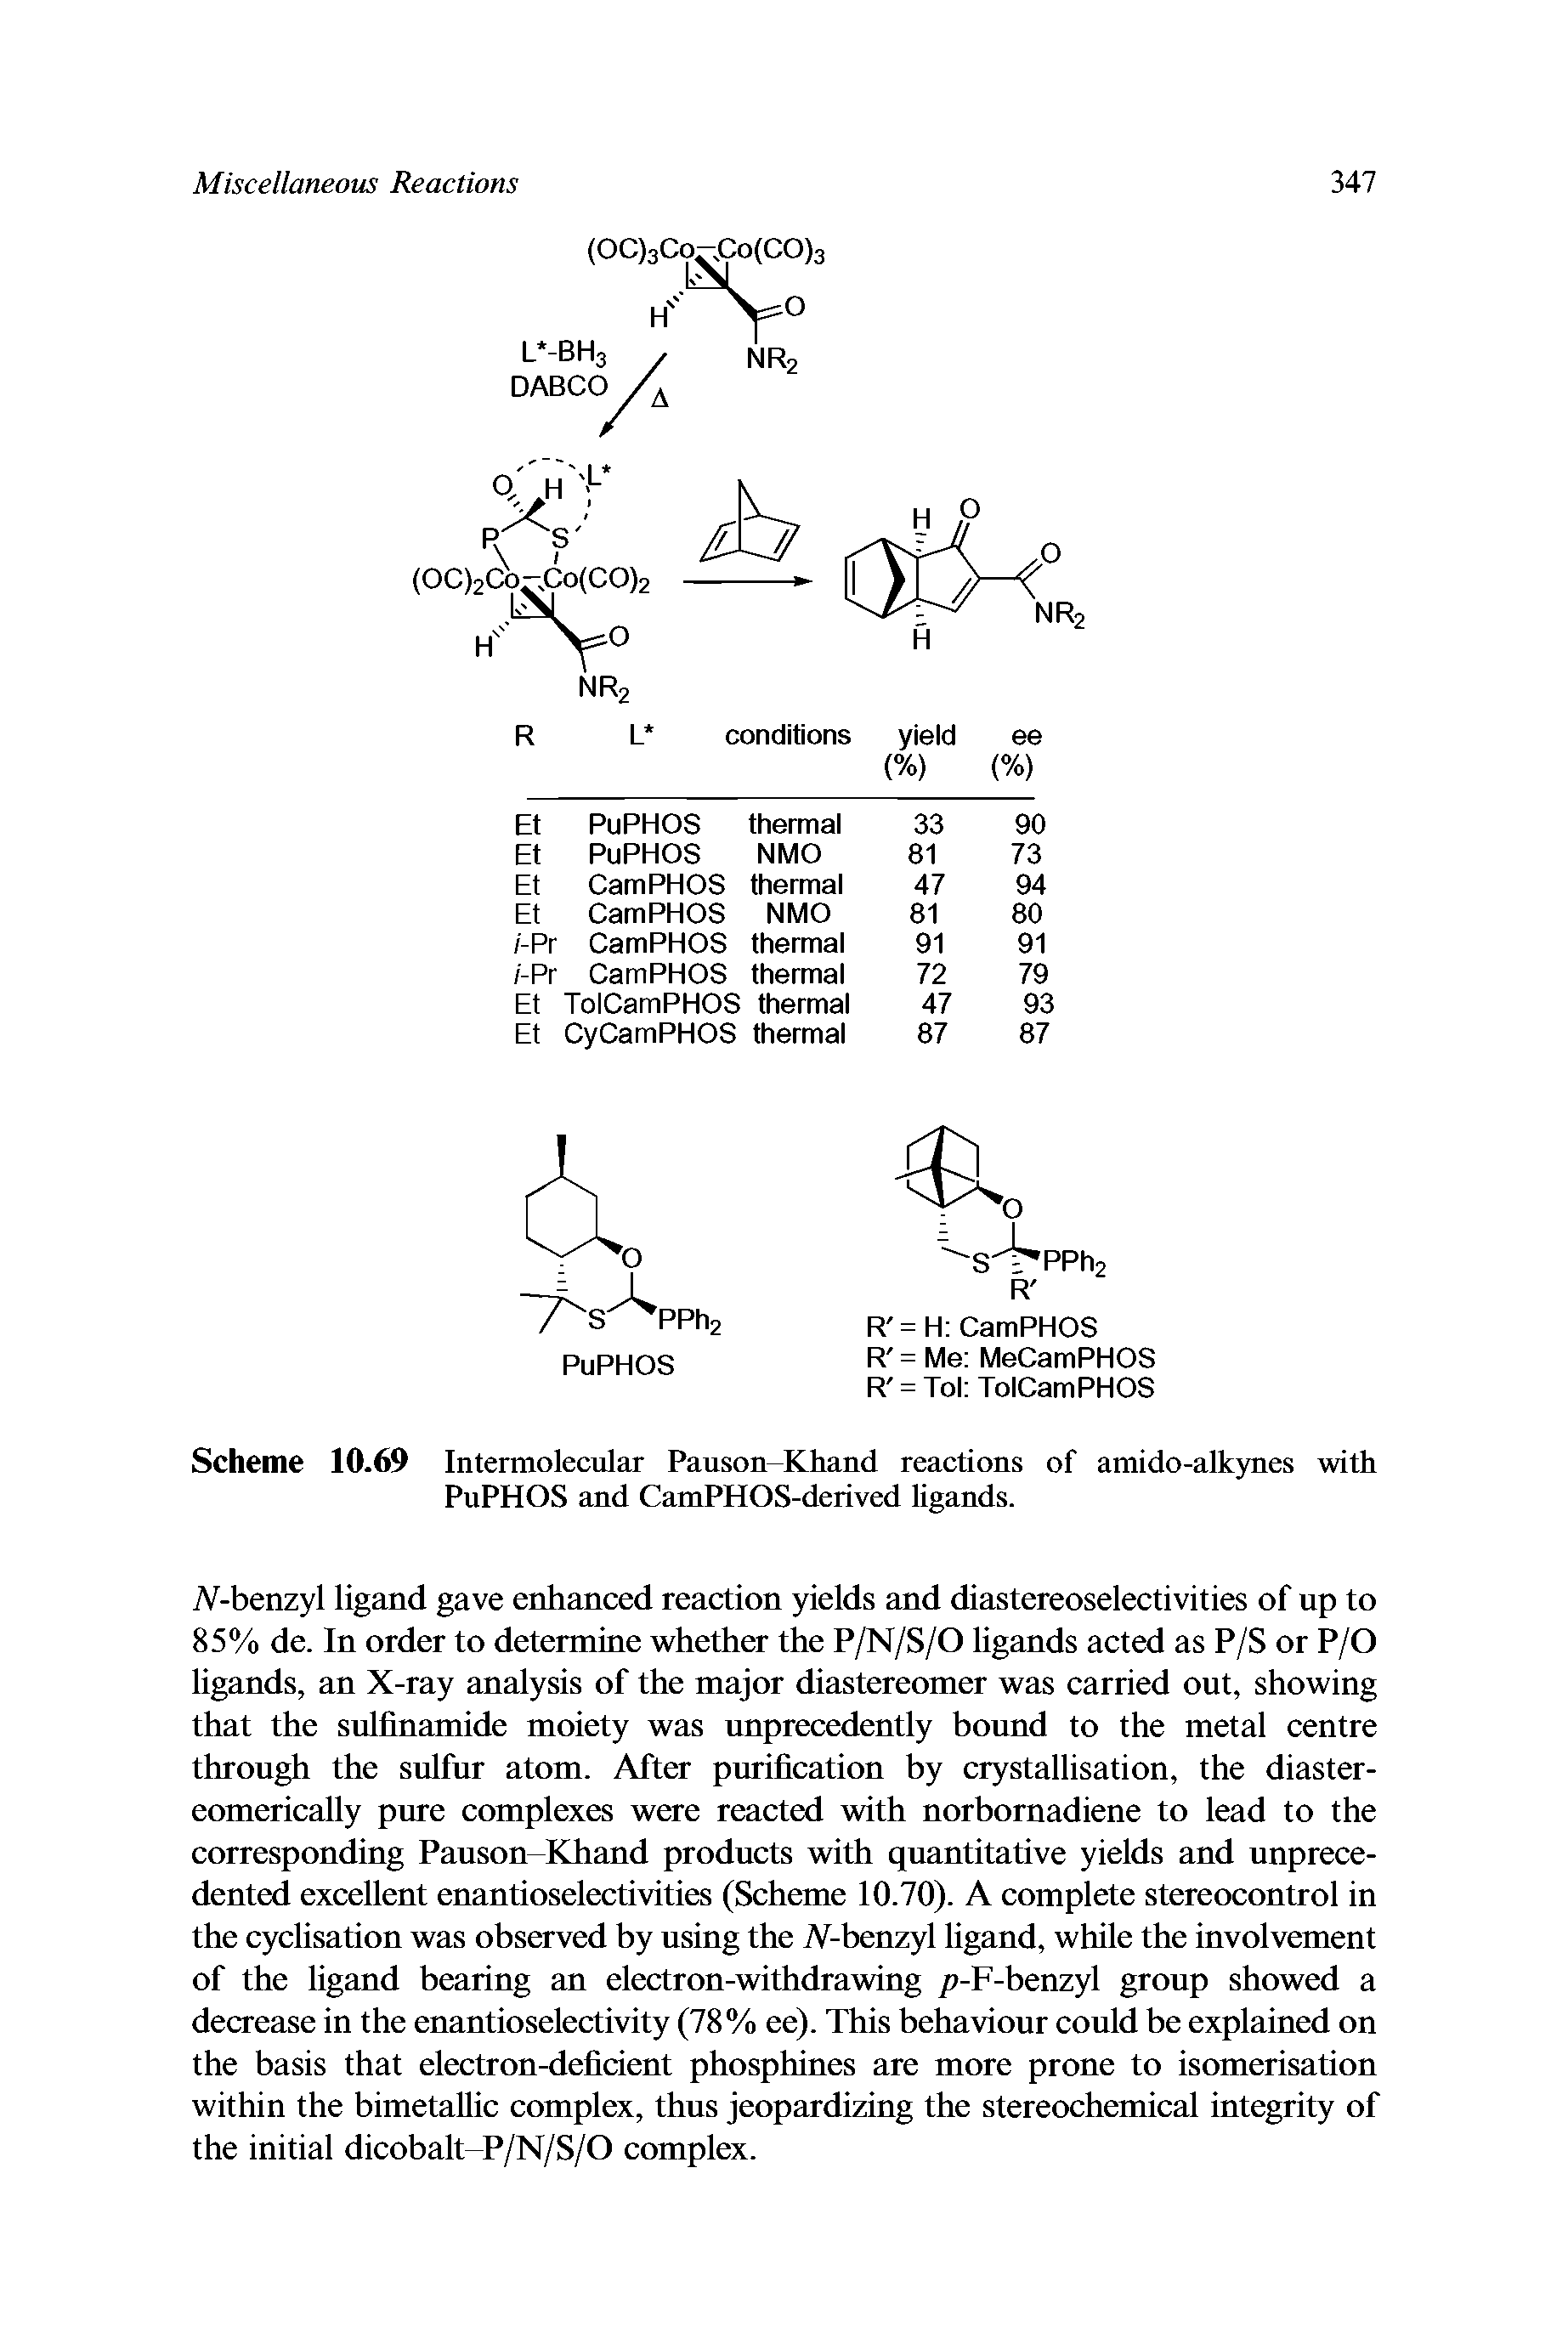 Scheme 10.69 Intermolecular Pauson-Khand reactions of amido-alk5mes with PuPHOS and CamPHOS-derived ligands.